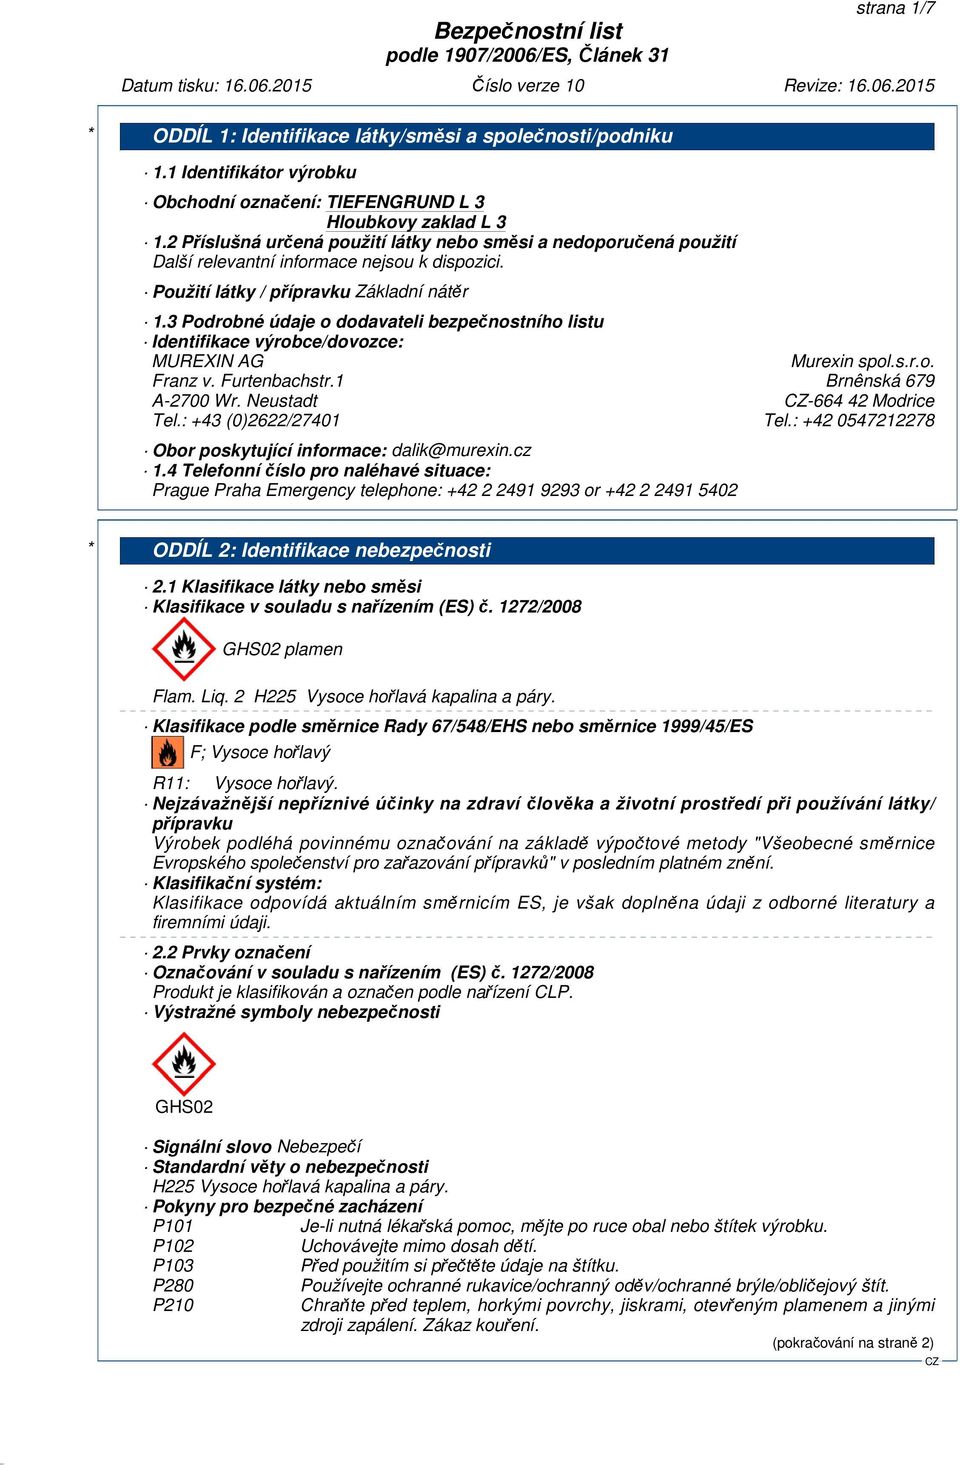 3 Podrobné údaje o dodavateli bezpečnostního listu Identifikace výrobce/dovozce: MUREXIN AG Murexin spol.s.r.o. Franz v. Furtenbachstr.1 Brnênská 679 A-2700 Wr. Neustadt -664 42 Modrice Tel.